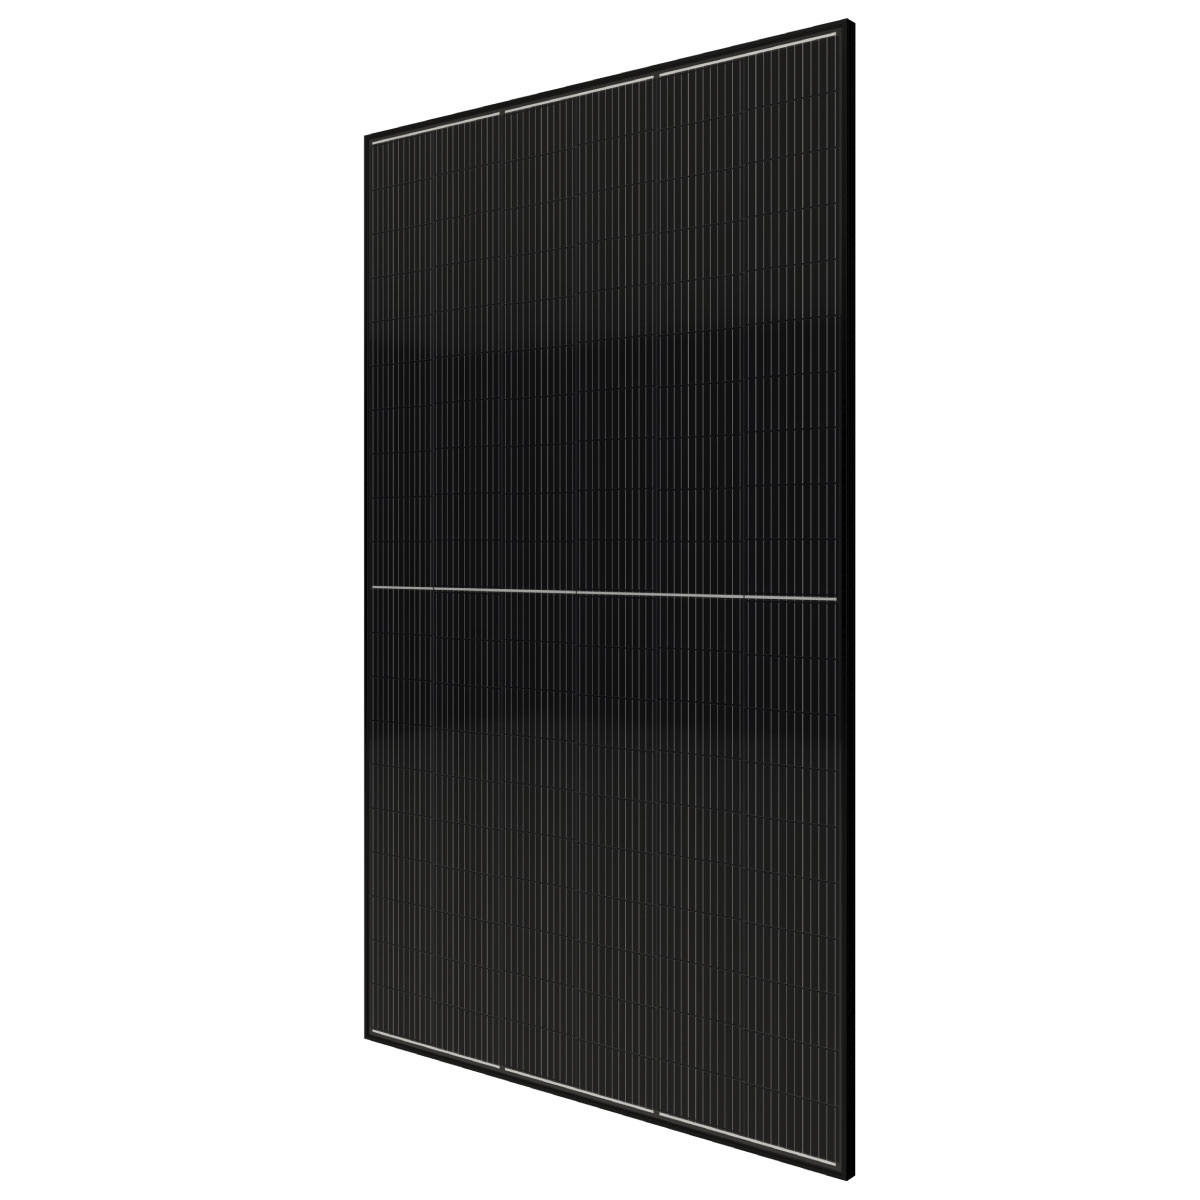 TommaTech 595Wp 120PM M12 Dark Series Solar Panel